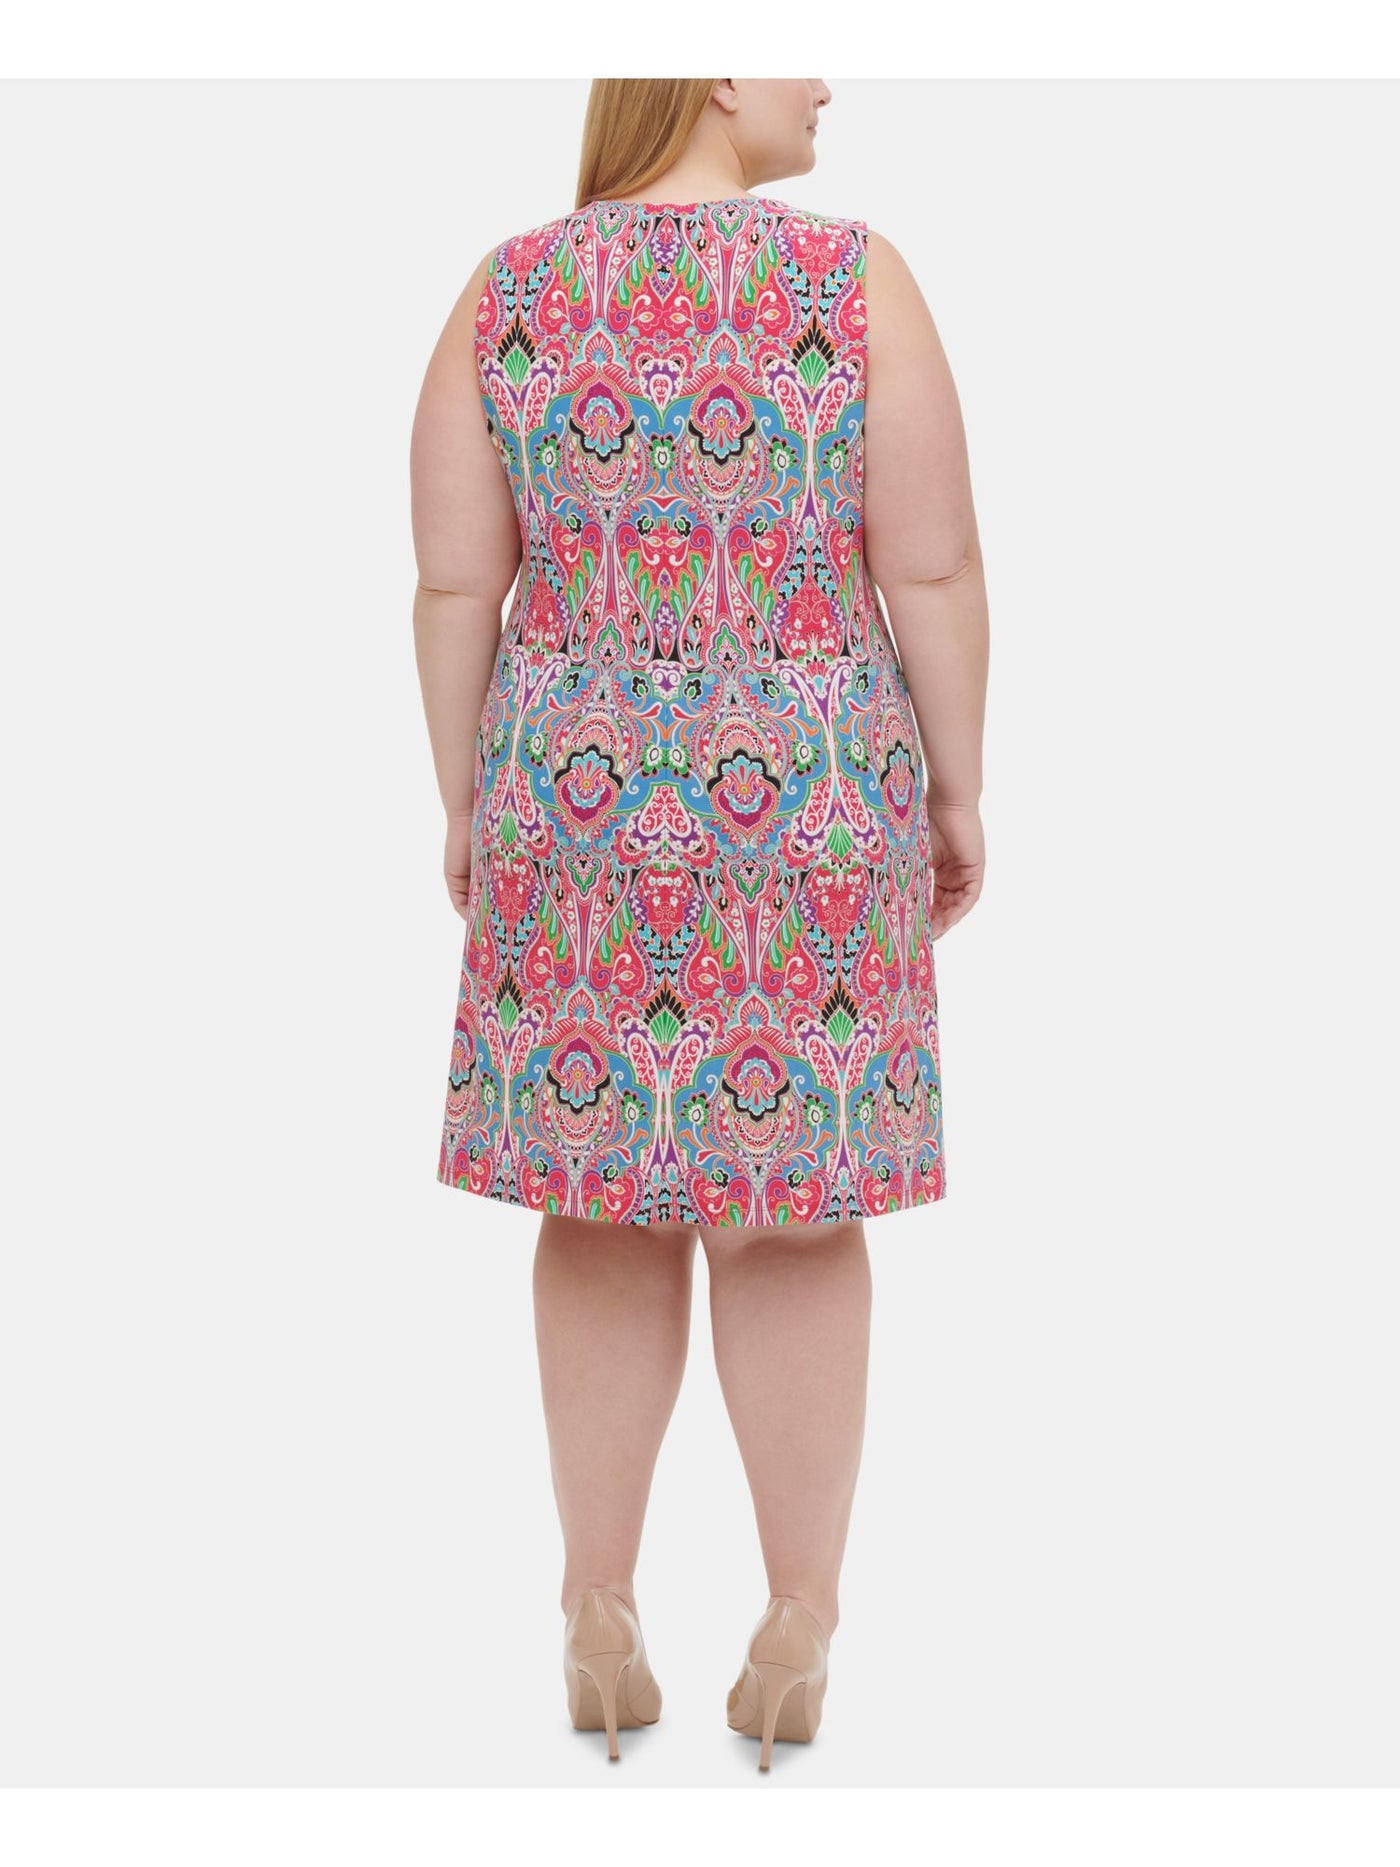 TOMMY HILFIGER Womens Pink Printed Sleeveless Jewel Neck Knee Length Shift Dress 20W